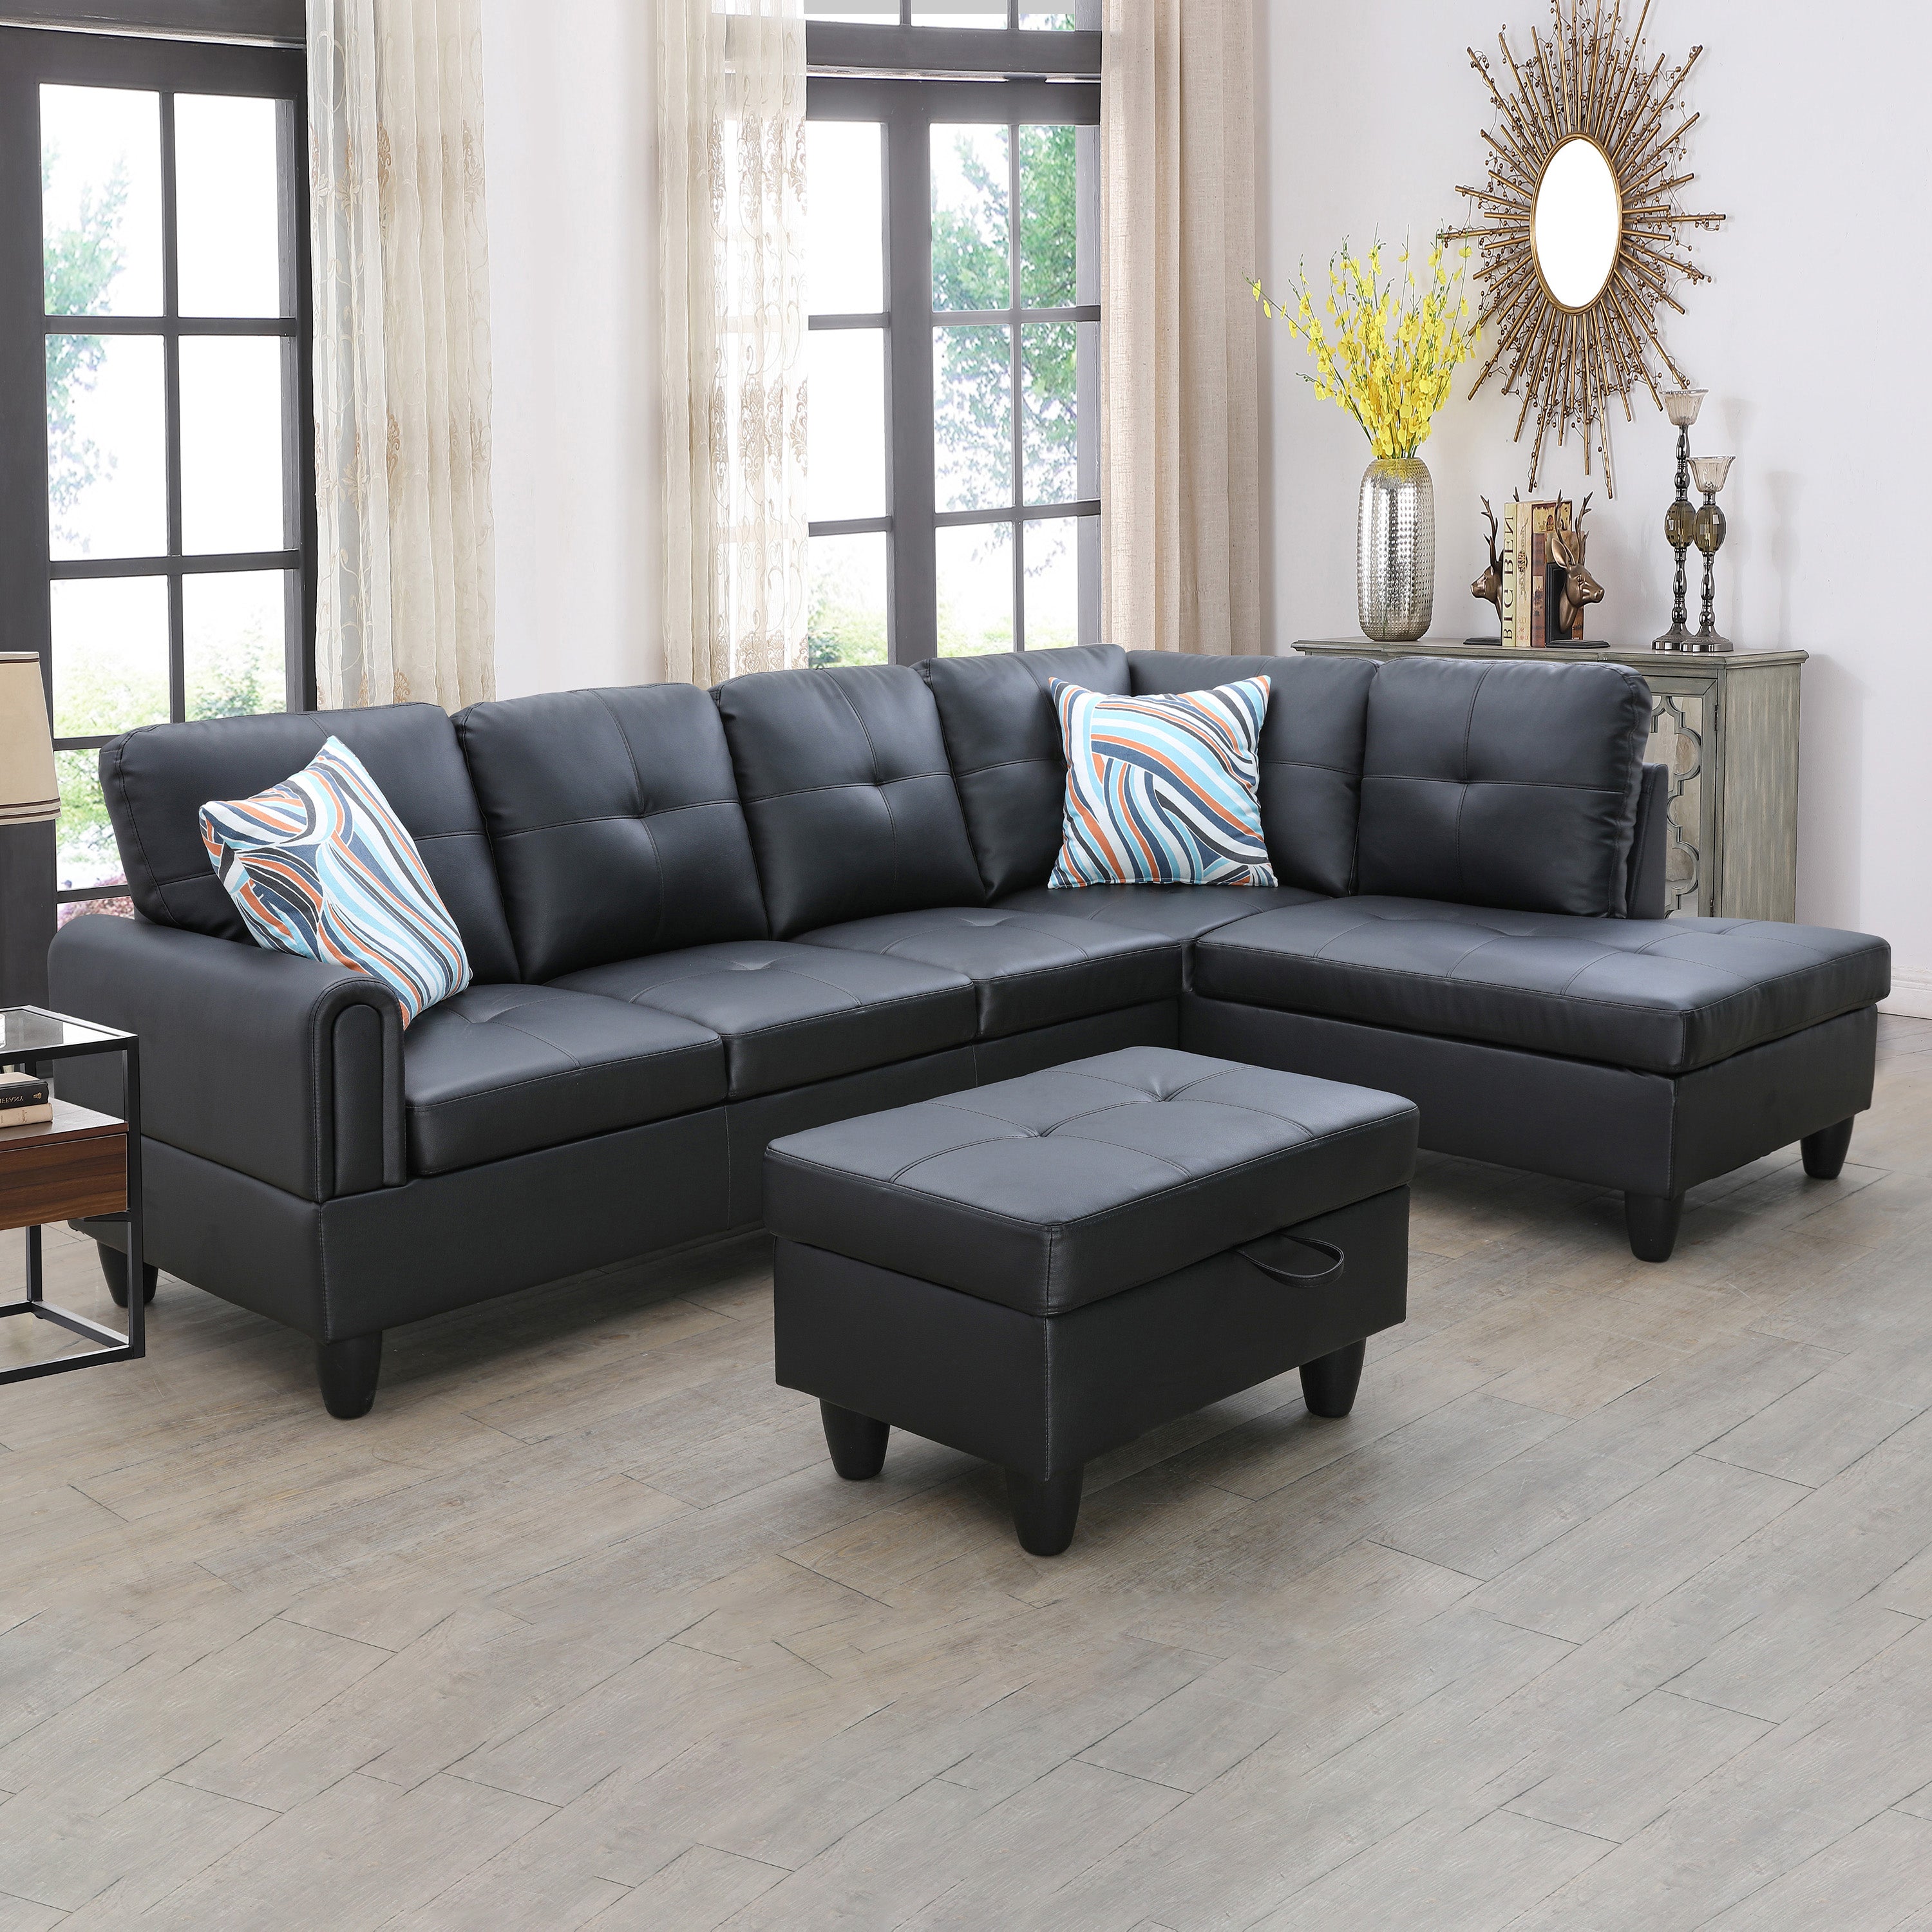 Ainehome Black Faux Leather Living Room Sofa Set